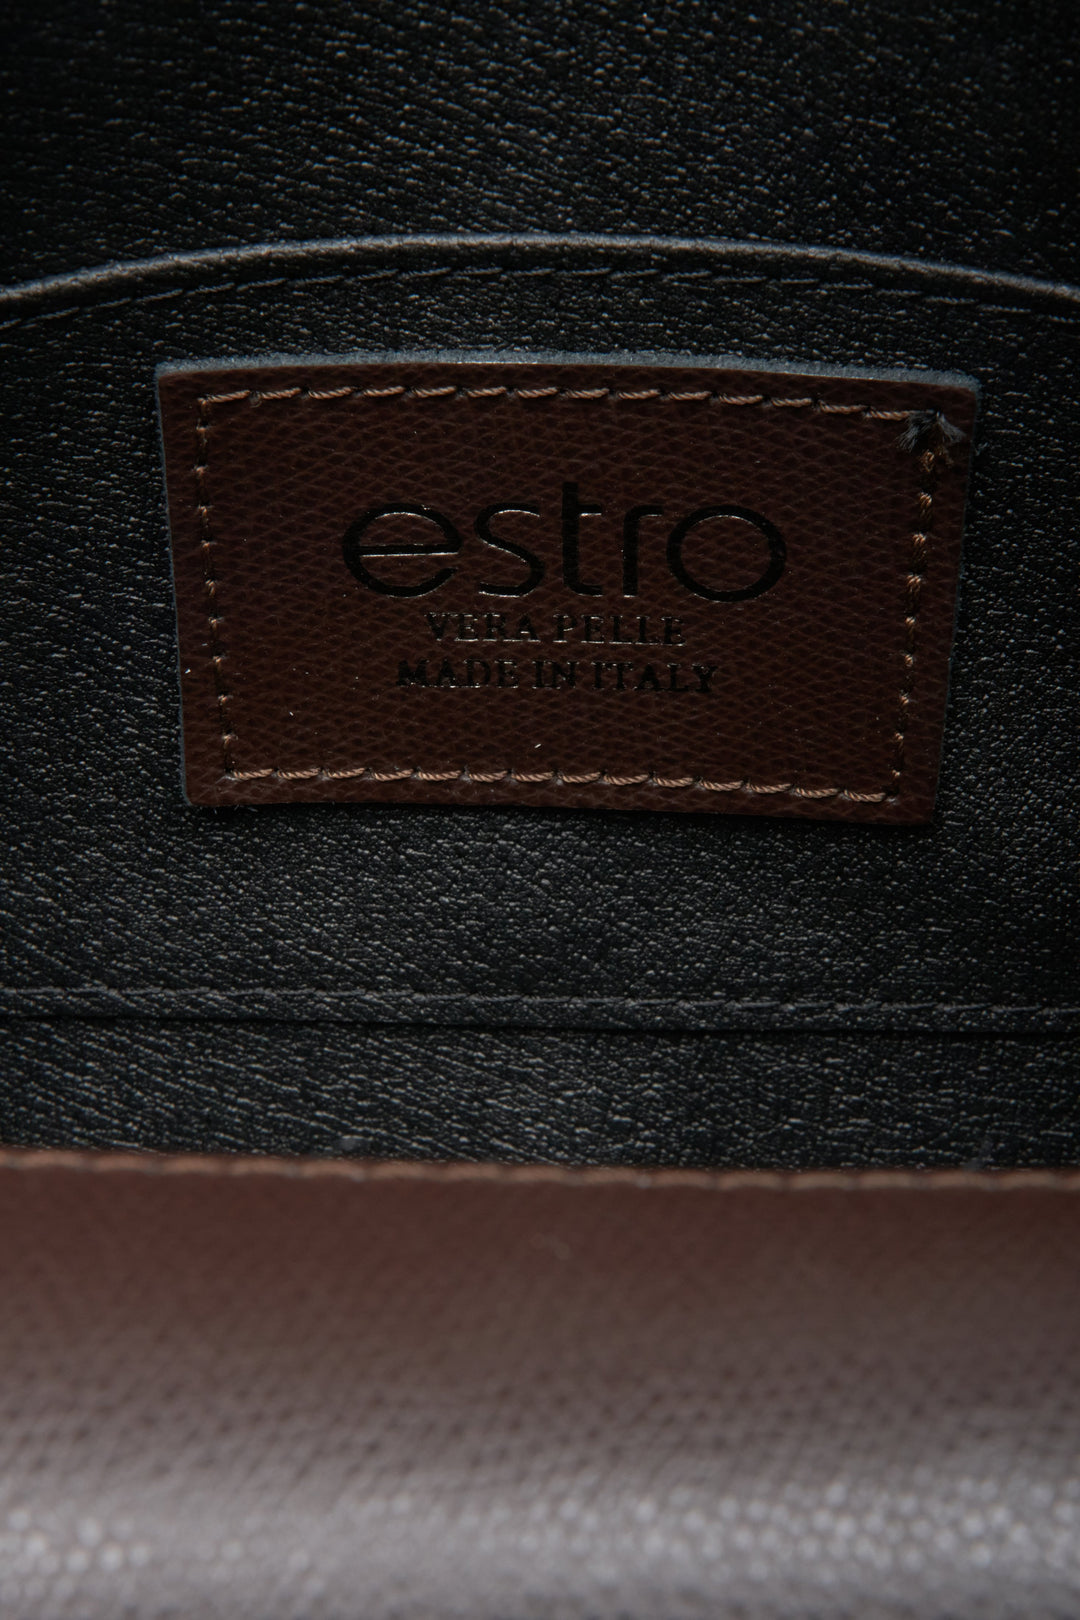 Women's dark brown leather handbag by Estro - close-up on details.